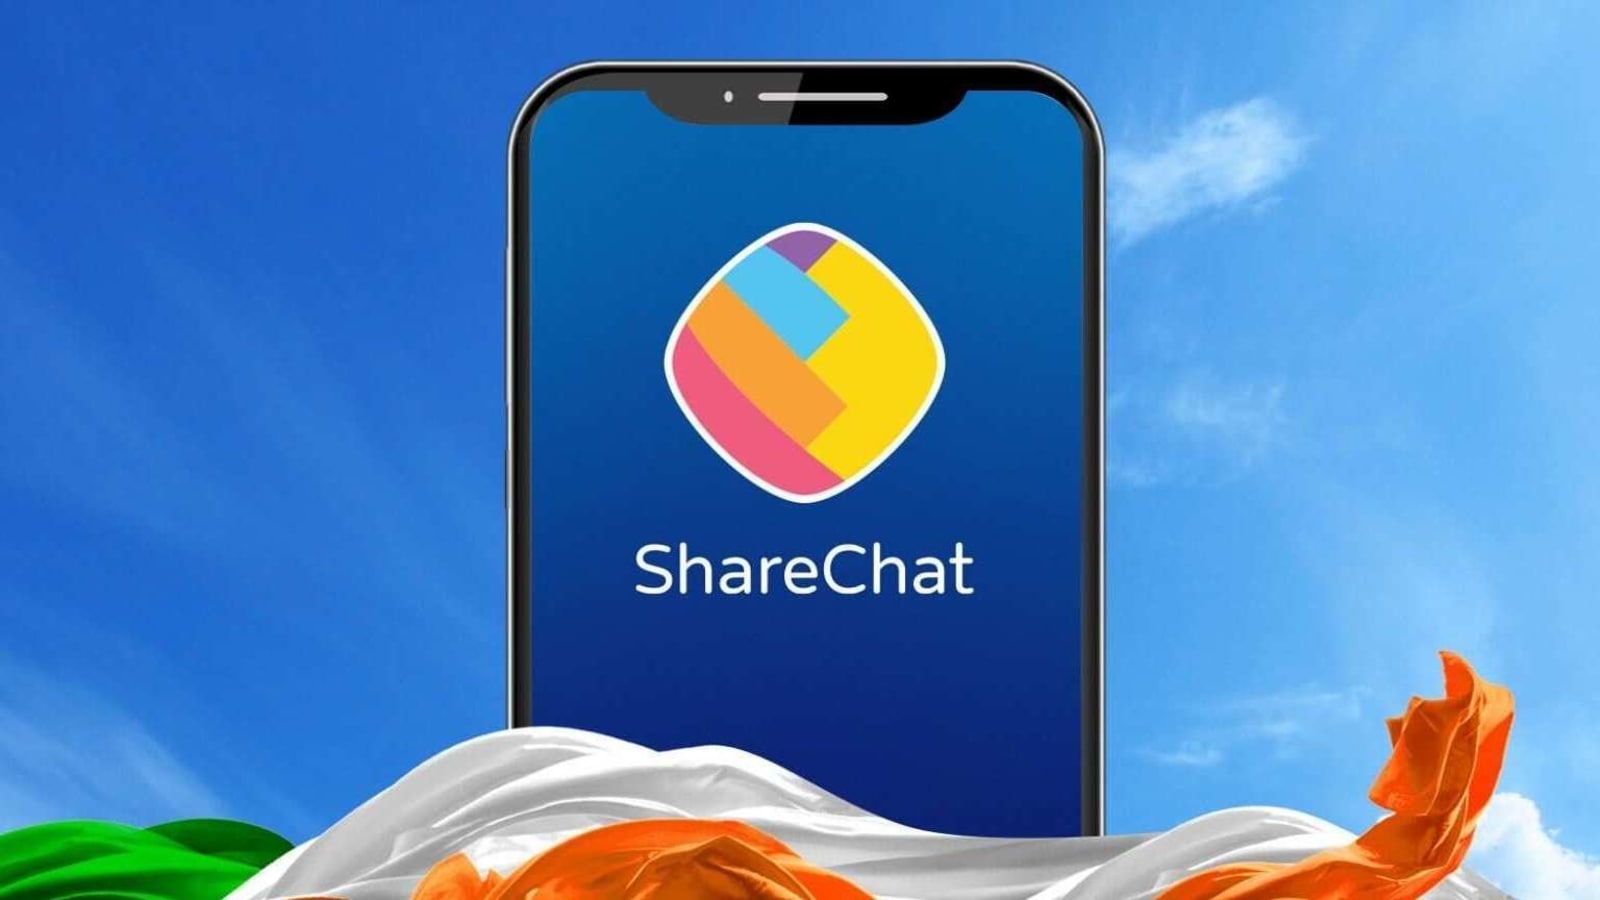 sharechat logo editing Images • ᵛ͢ᵎᵖ⏤✺⃟👑 SKY 👑✺⃟❤ (@pittyabhai) on  ShareChat